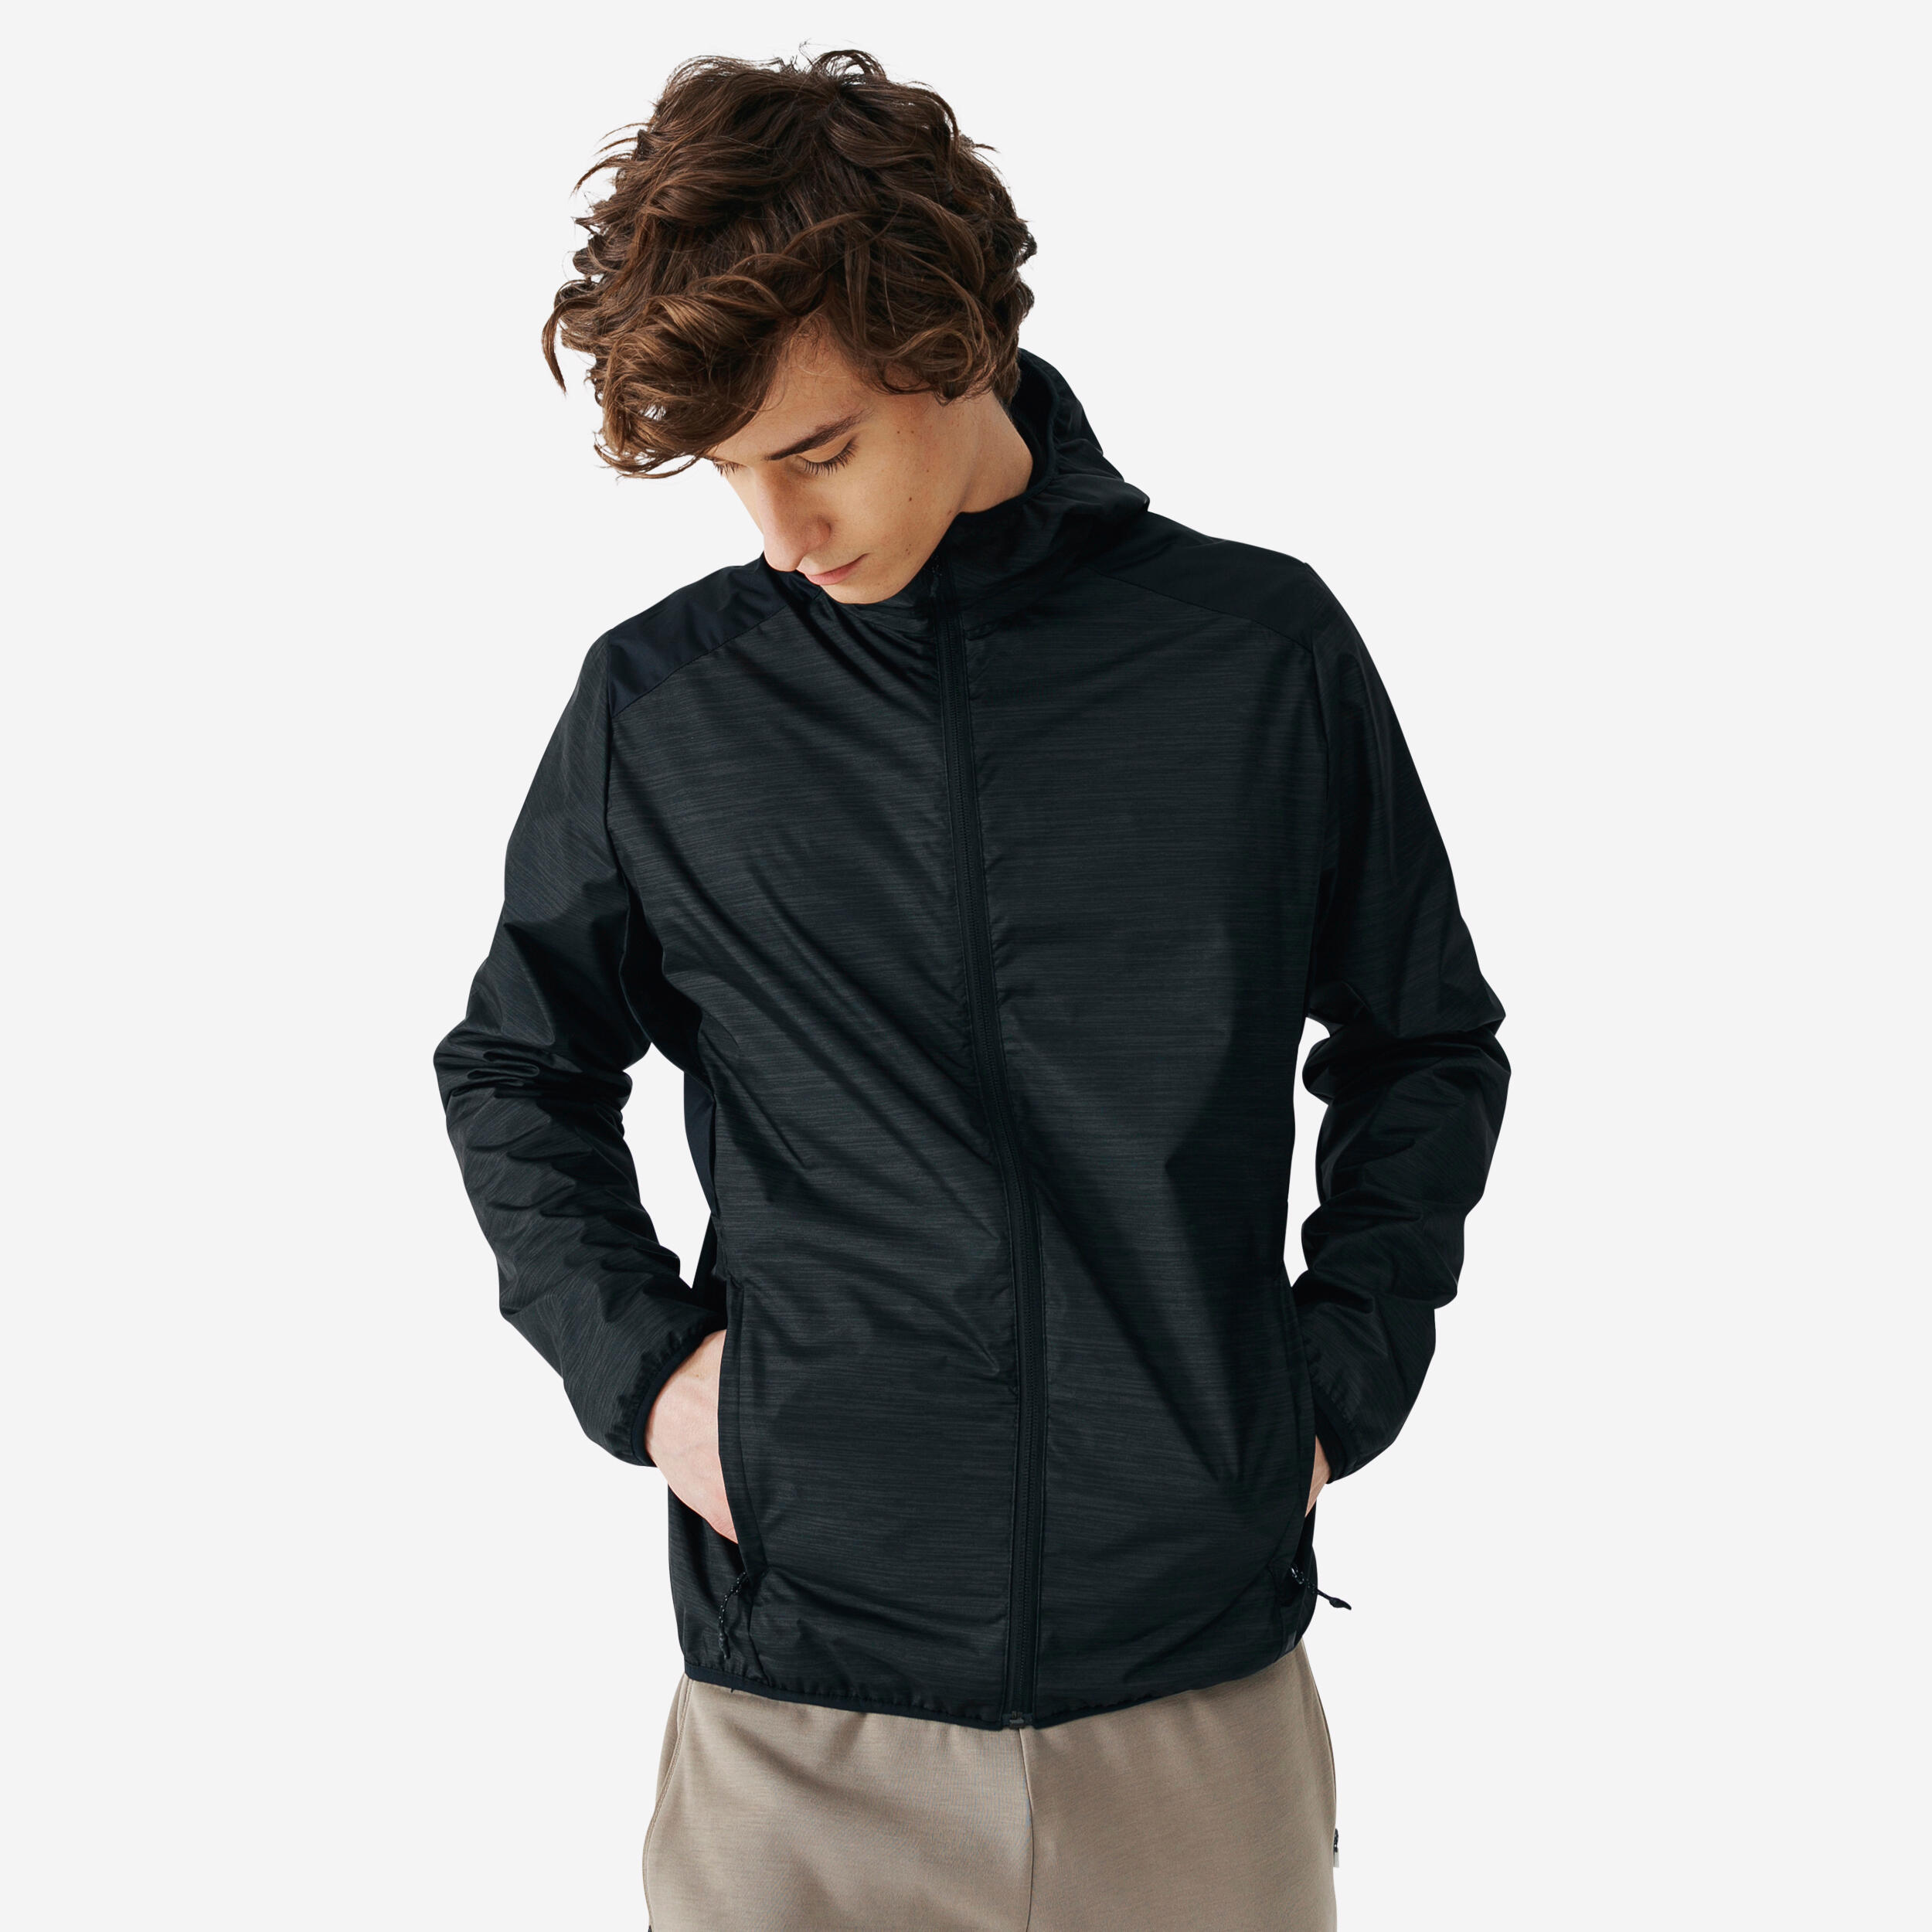 Decathlon👕|Men Basic Fitness Tracksuit Jacket - Khaki | Domyos brand jacket  - YouTube